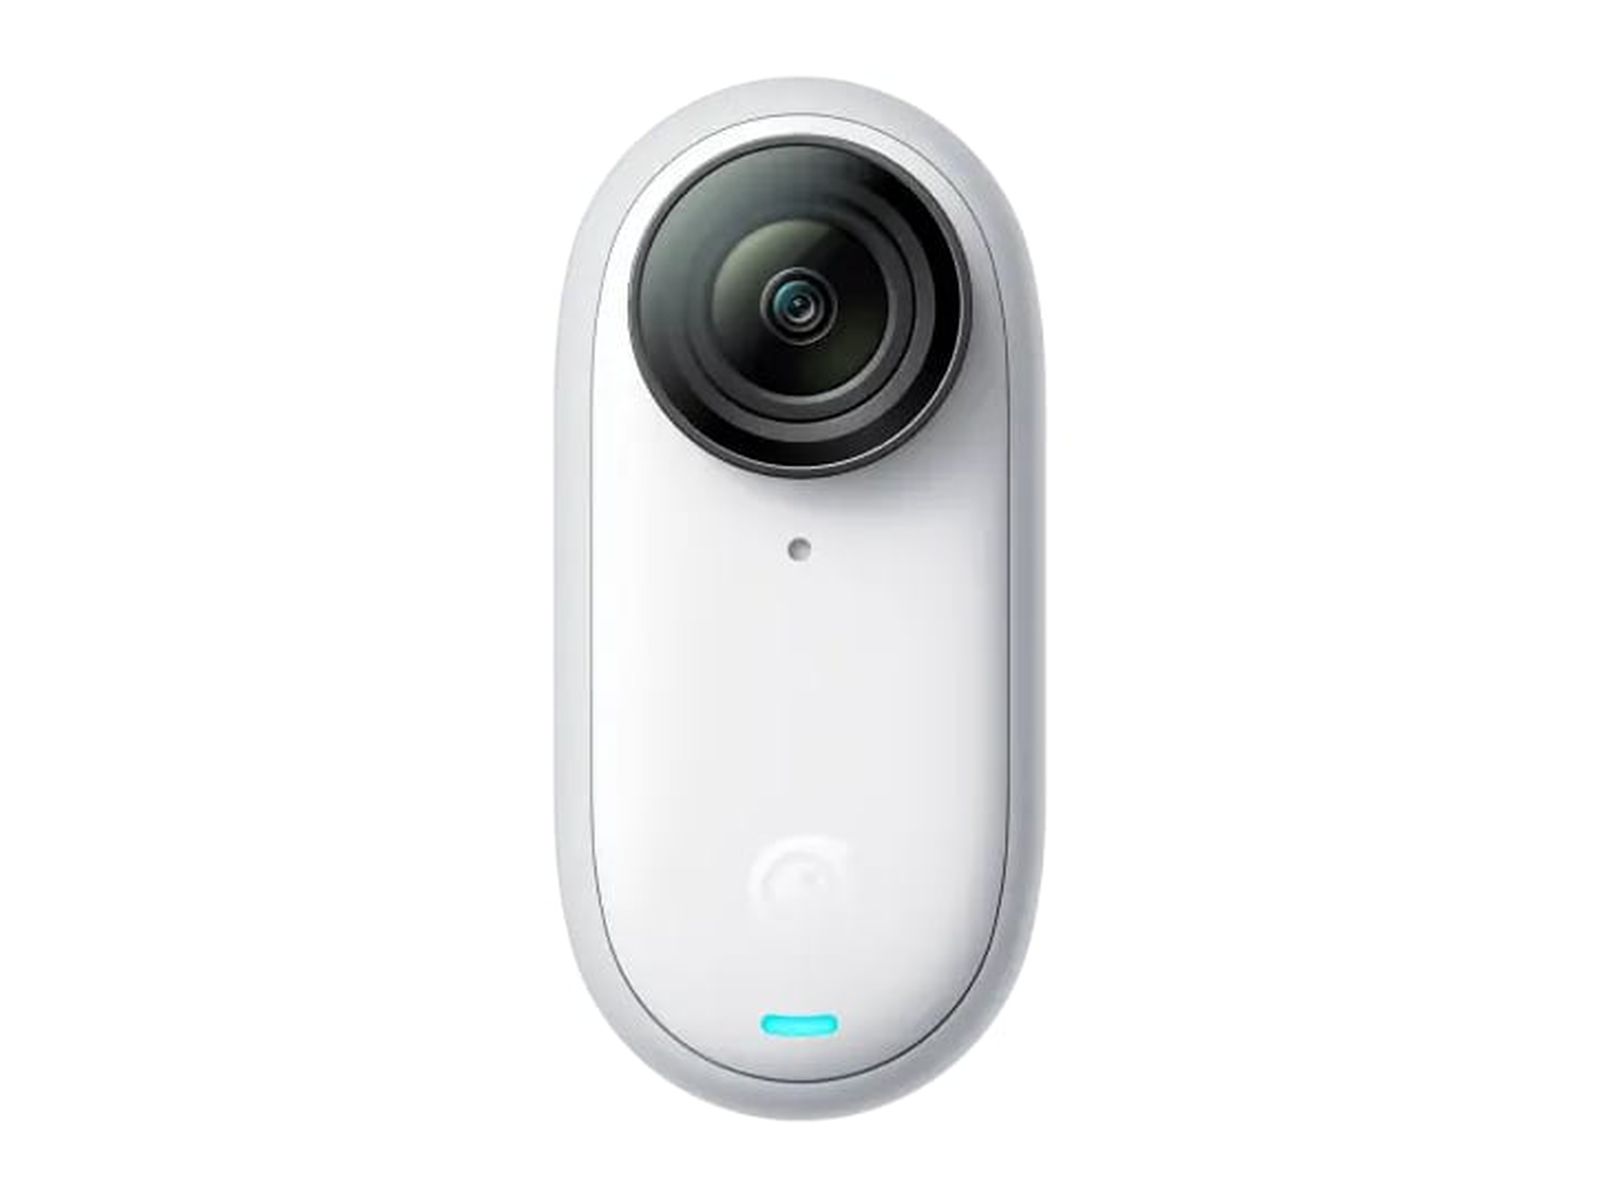 Insta360 Announces New Tiny Action Camera - MacRumors